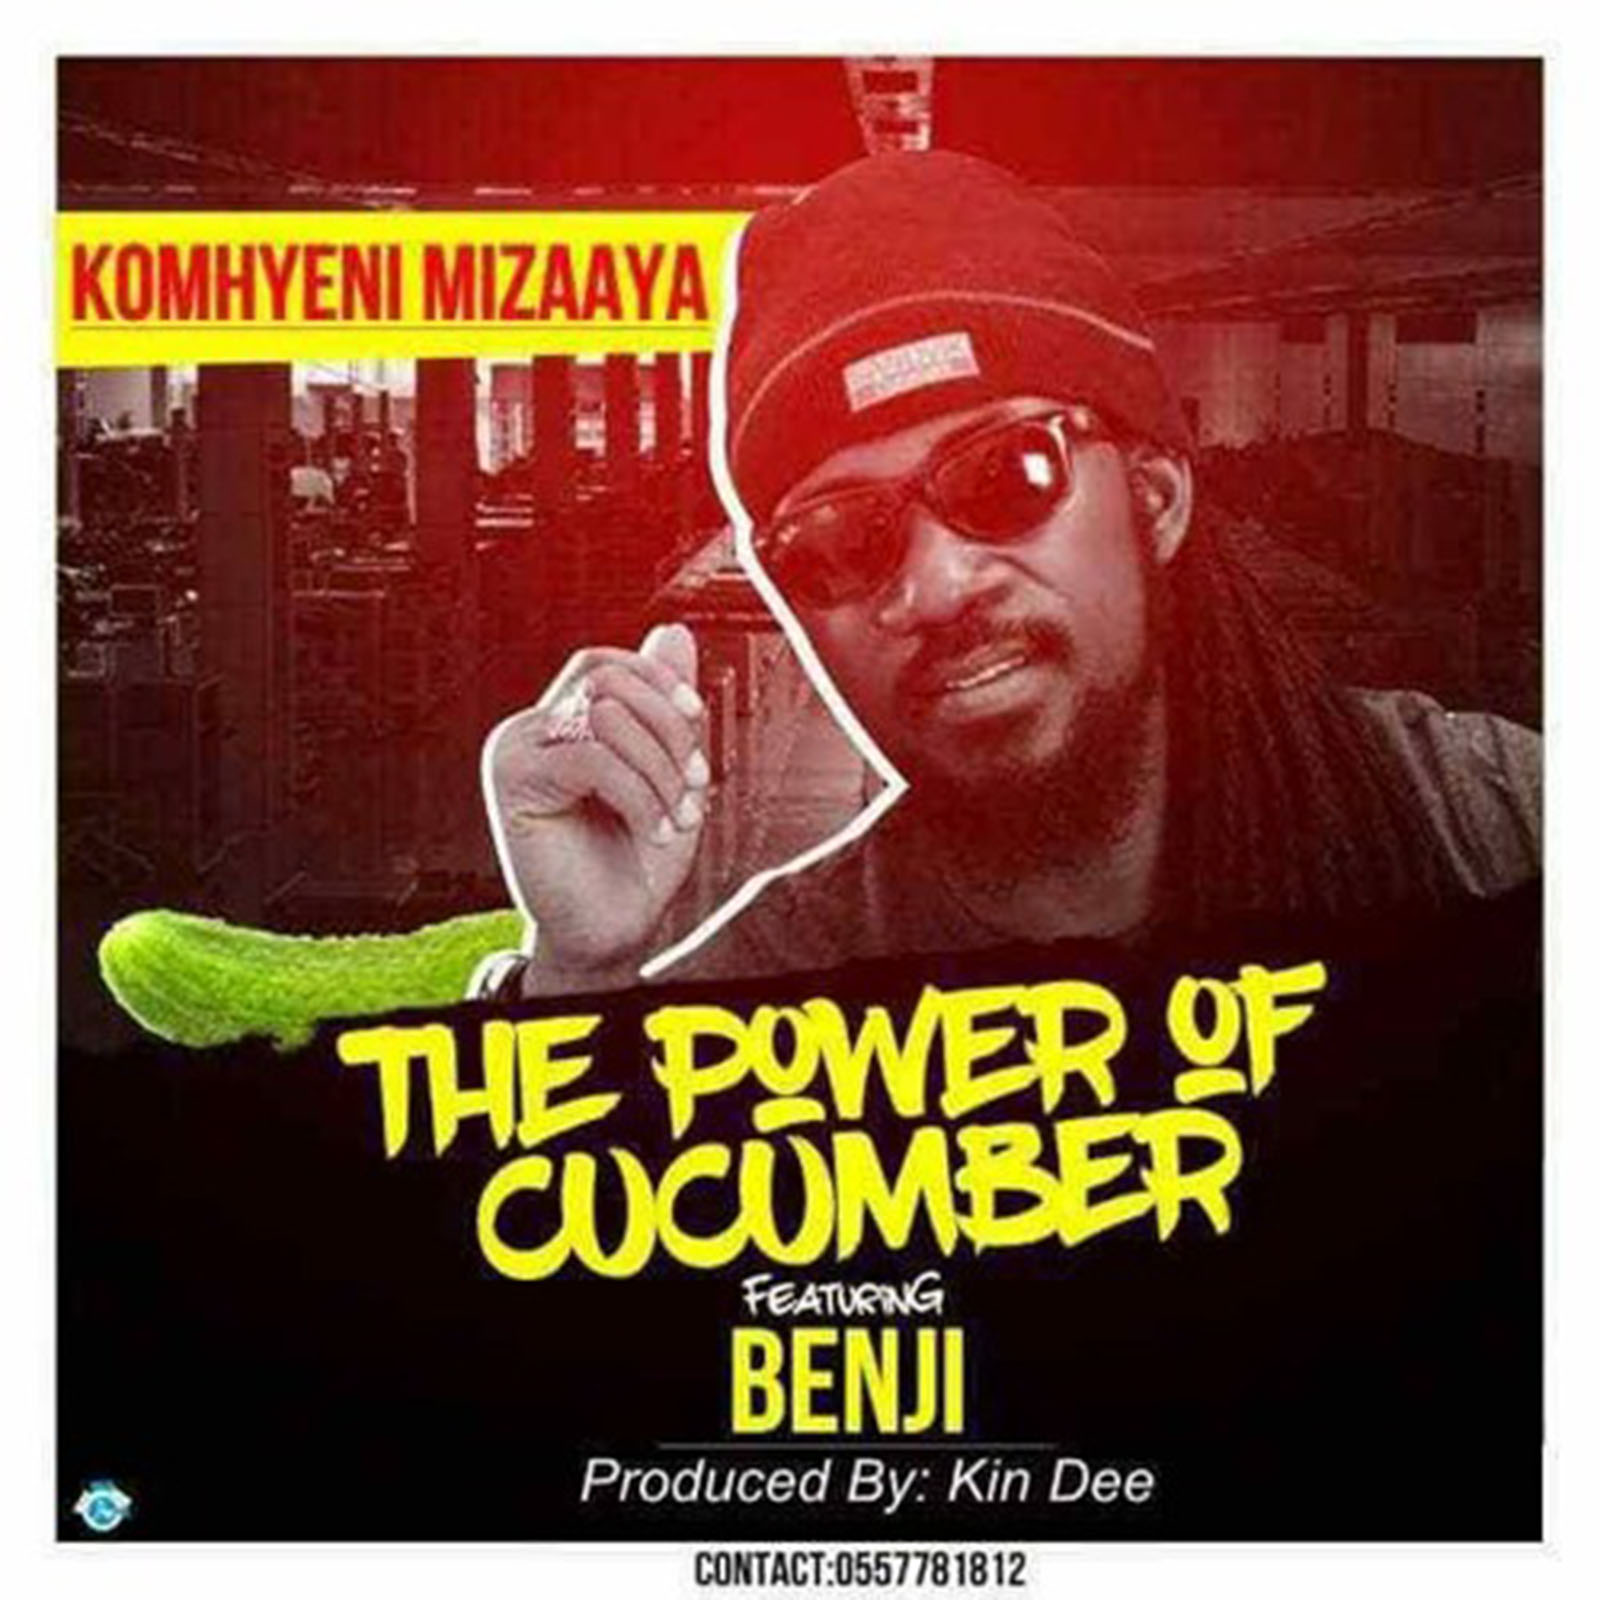 The Power Of Cucumber by Komhyeni Mizaaya